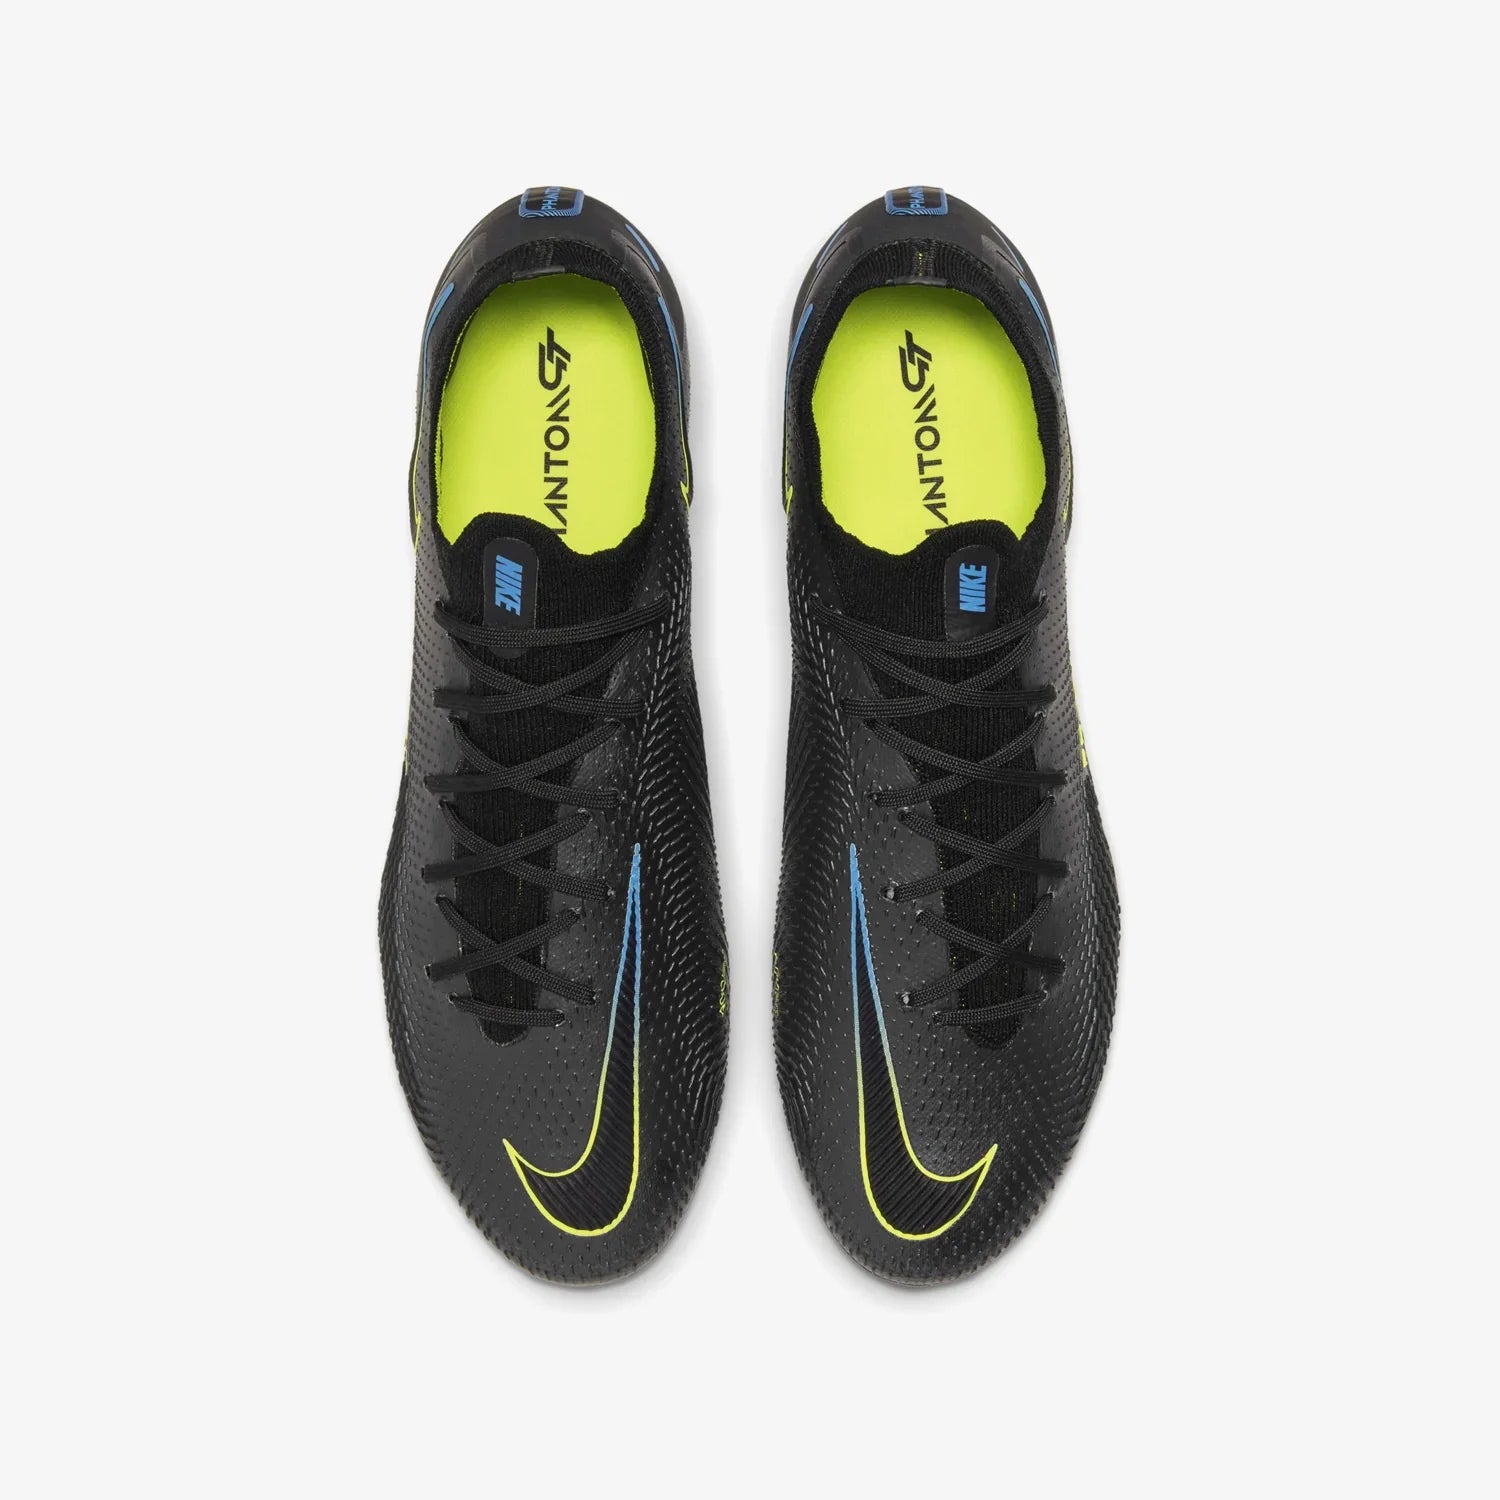 Nike Phantom GT Elite FG Firm Ground Football Boots Black/Blue